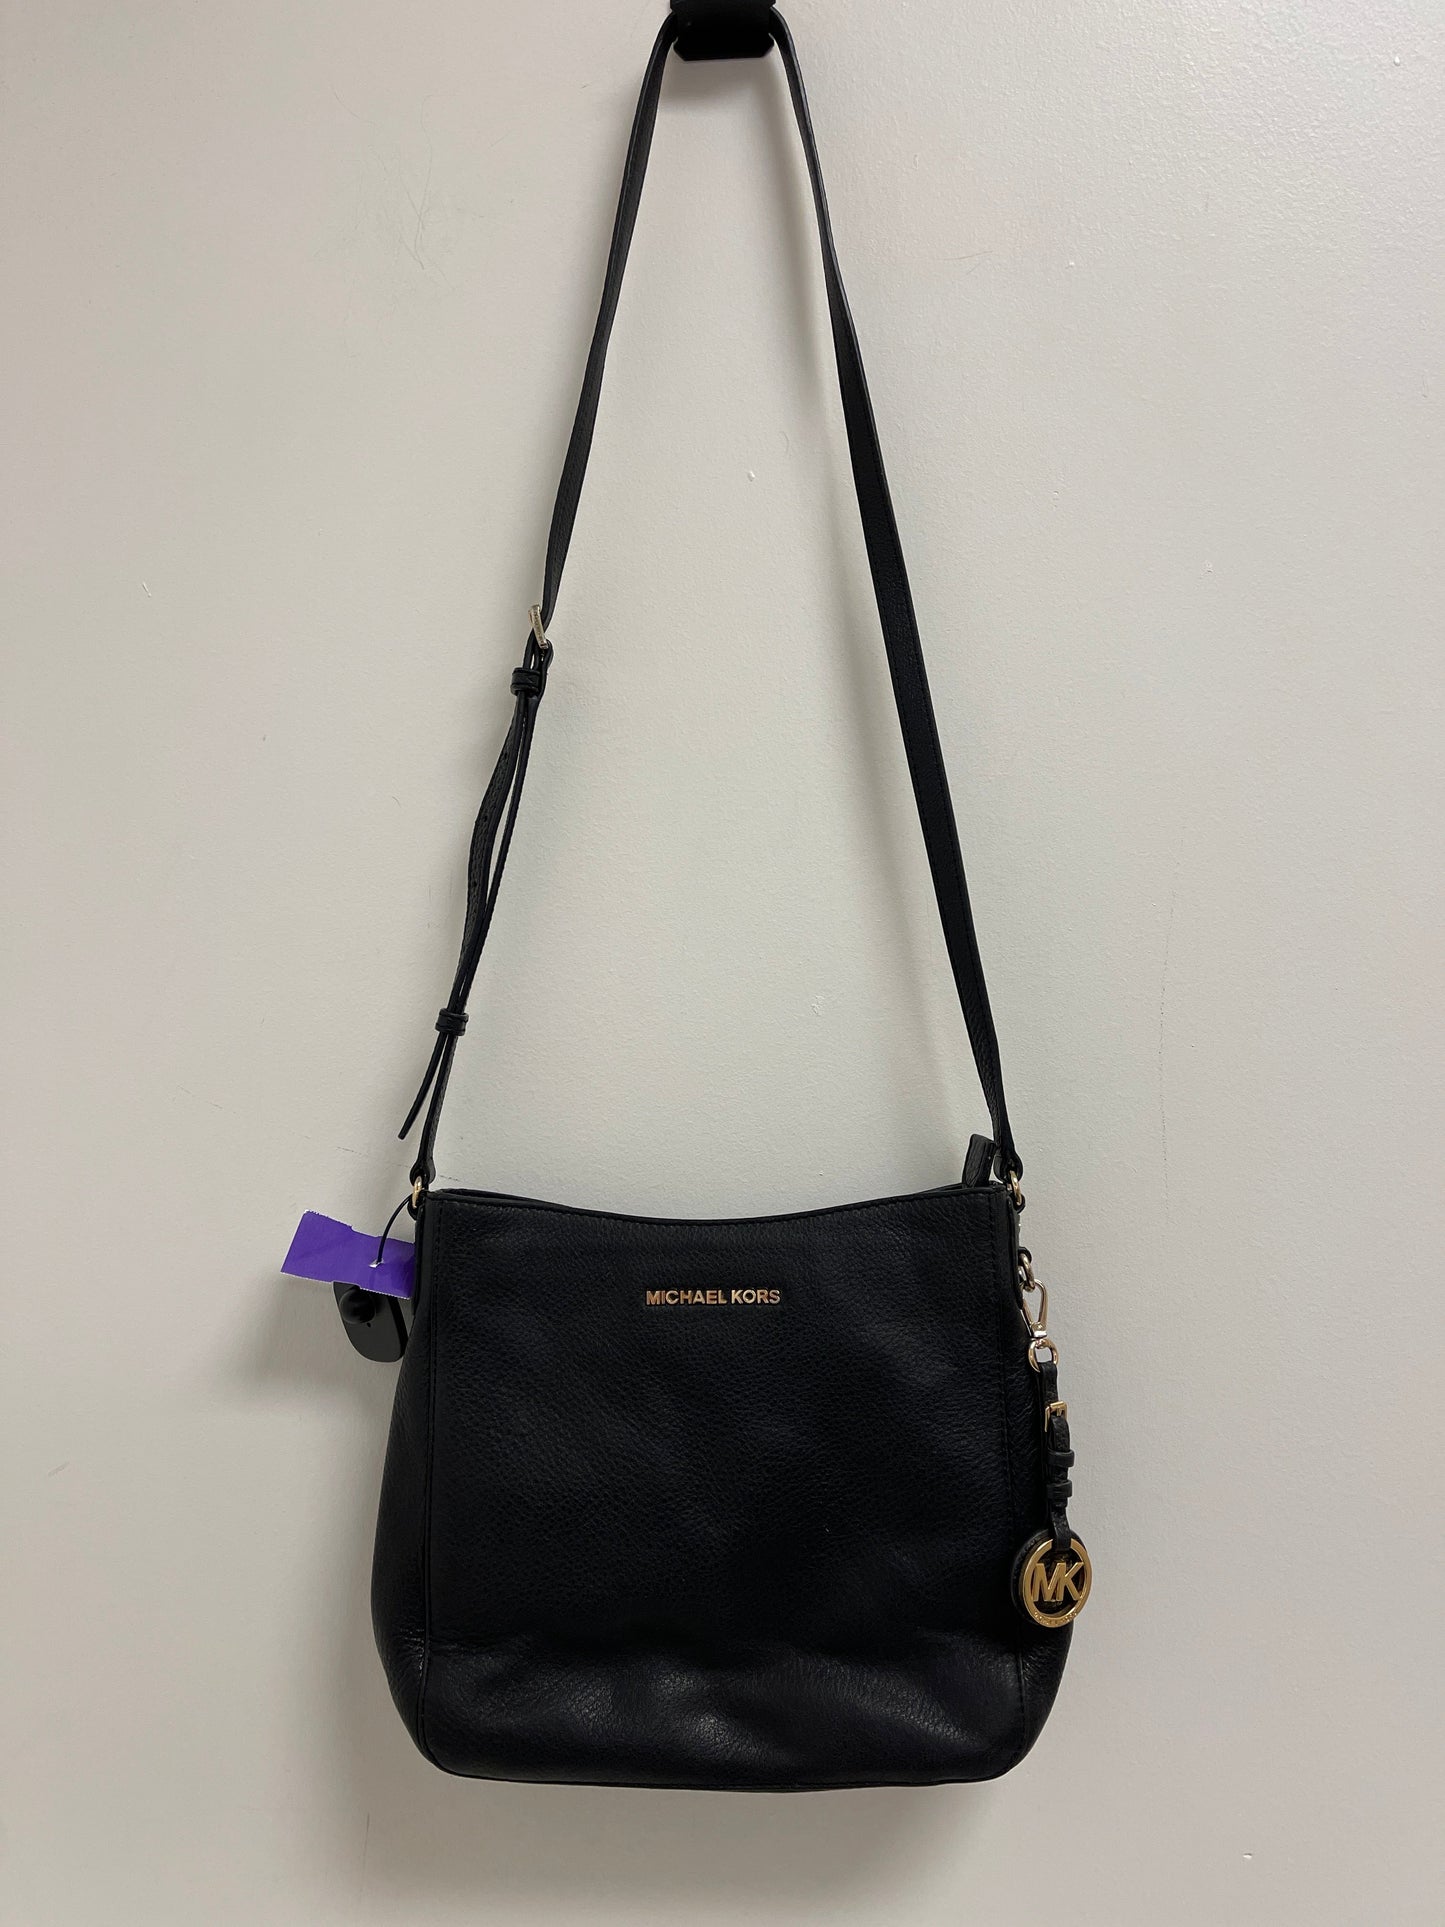 Black Handbag Designer Michael Kors, Size Medium